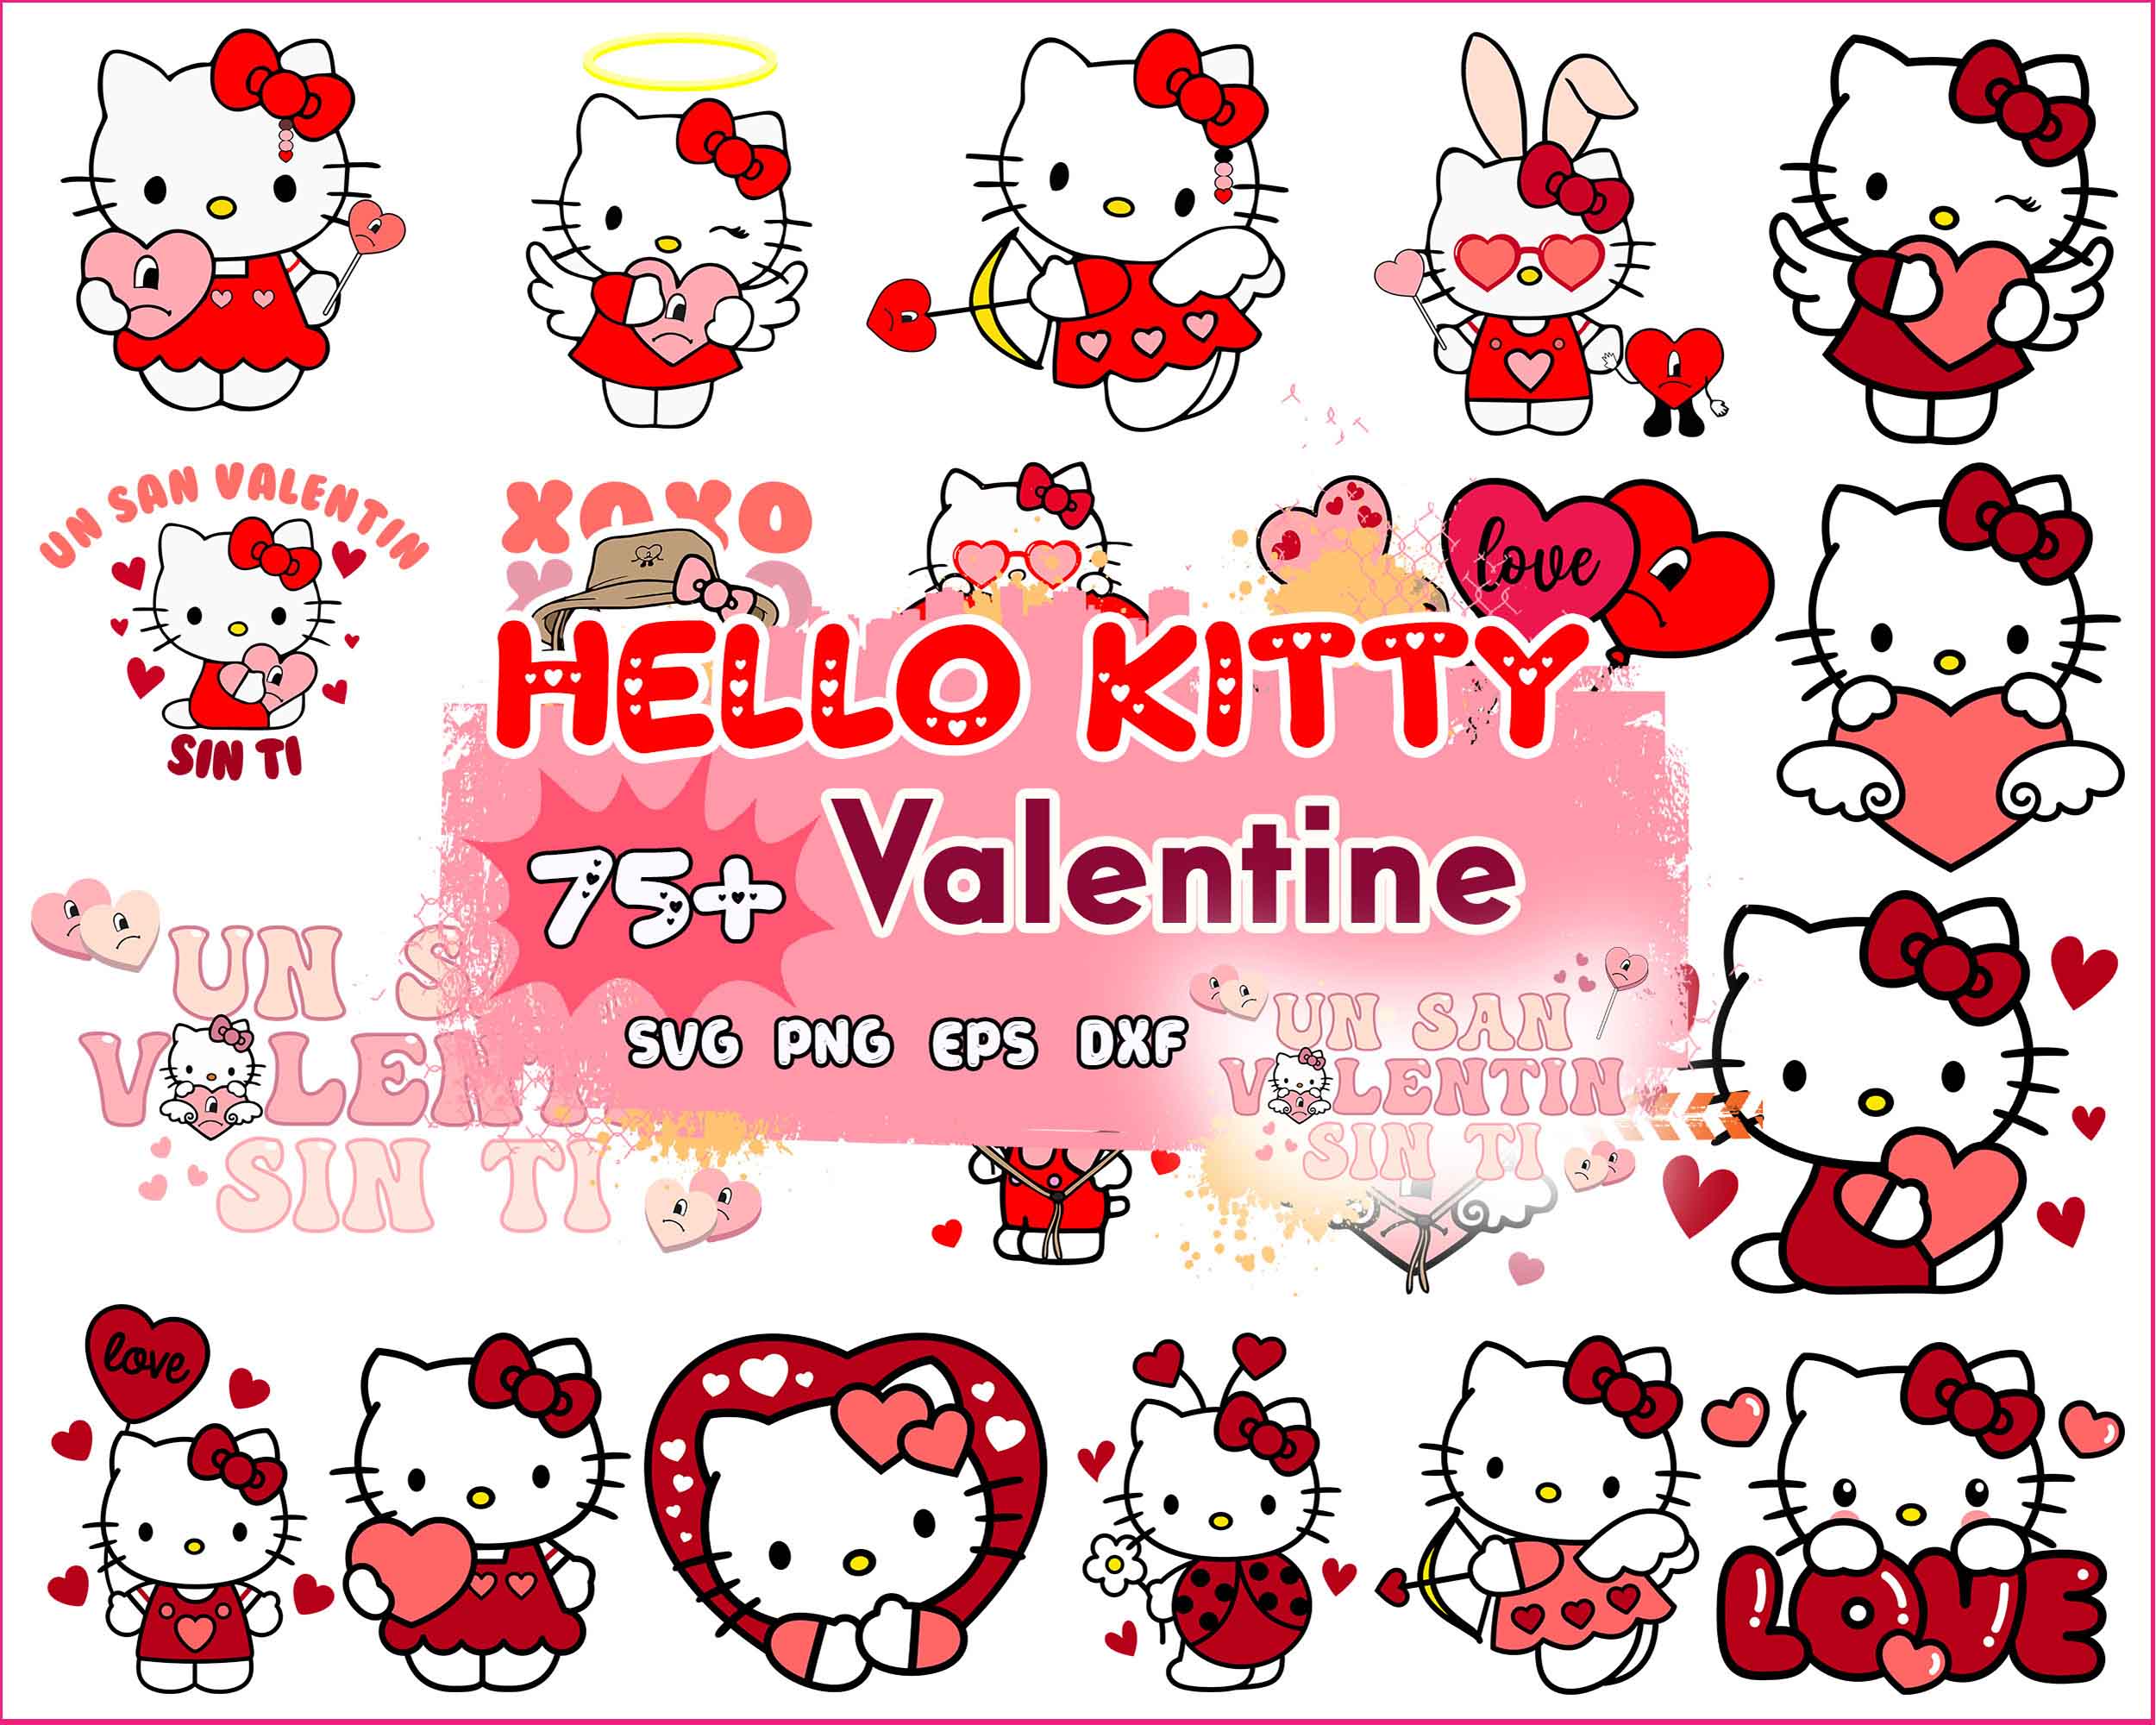 Updated 75+ Valentine Hello Kitty Bundle, Valentine kawaii kitty SVG png eps dxf, Cut File, Digital Download